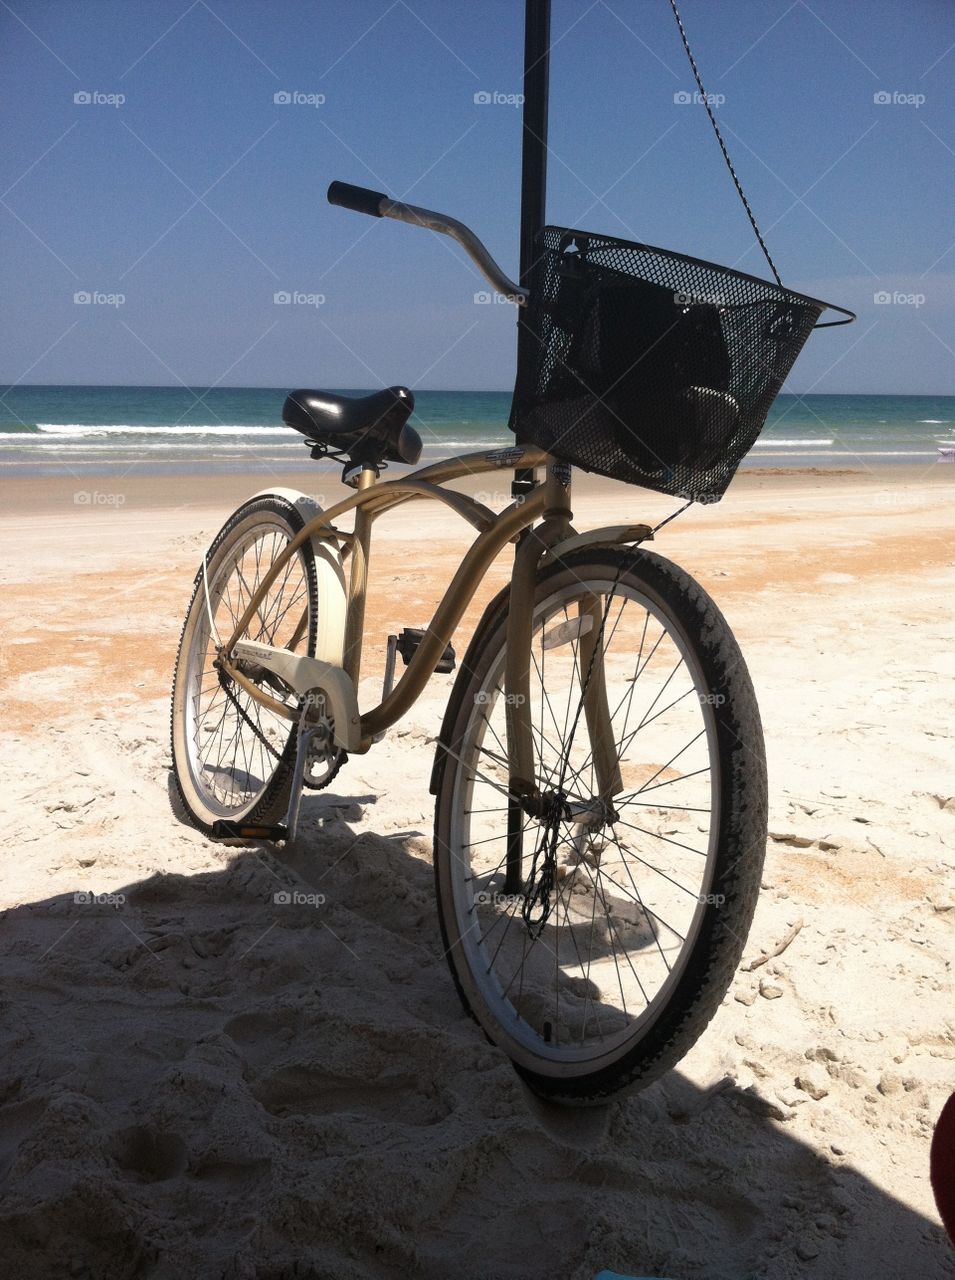 Bike on the beach. Enjoying the beach after a bike ride